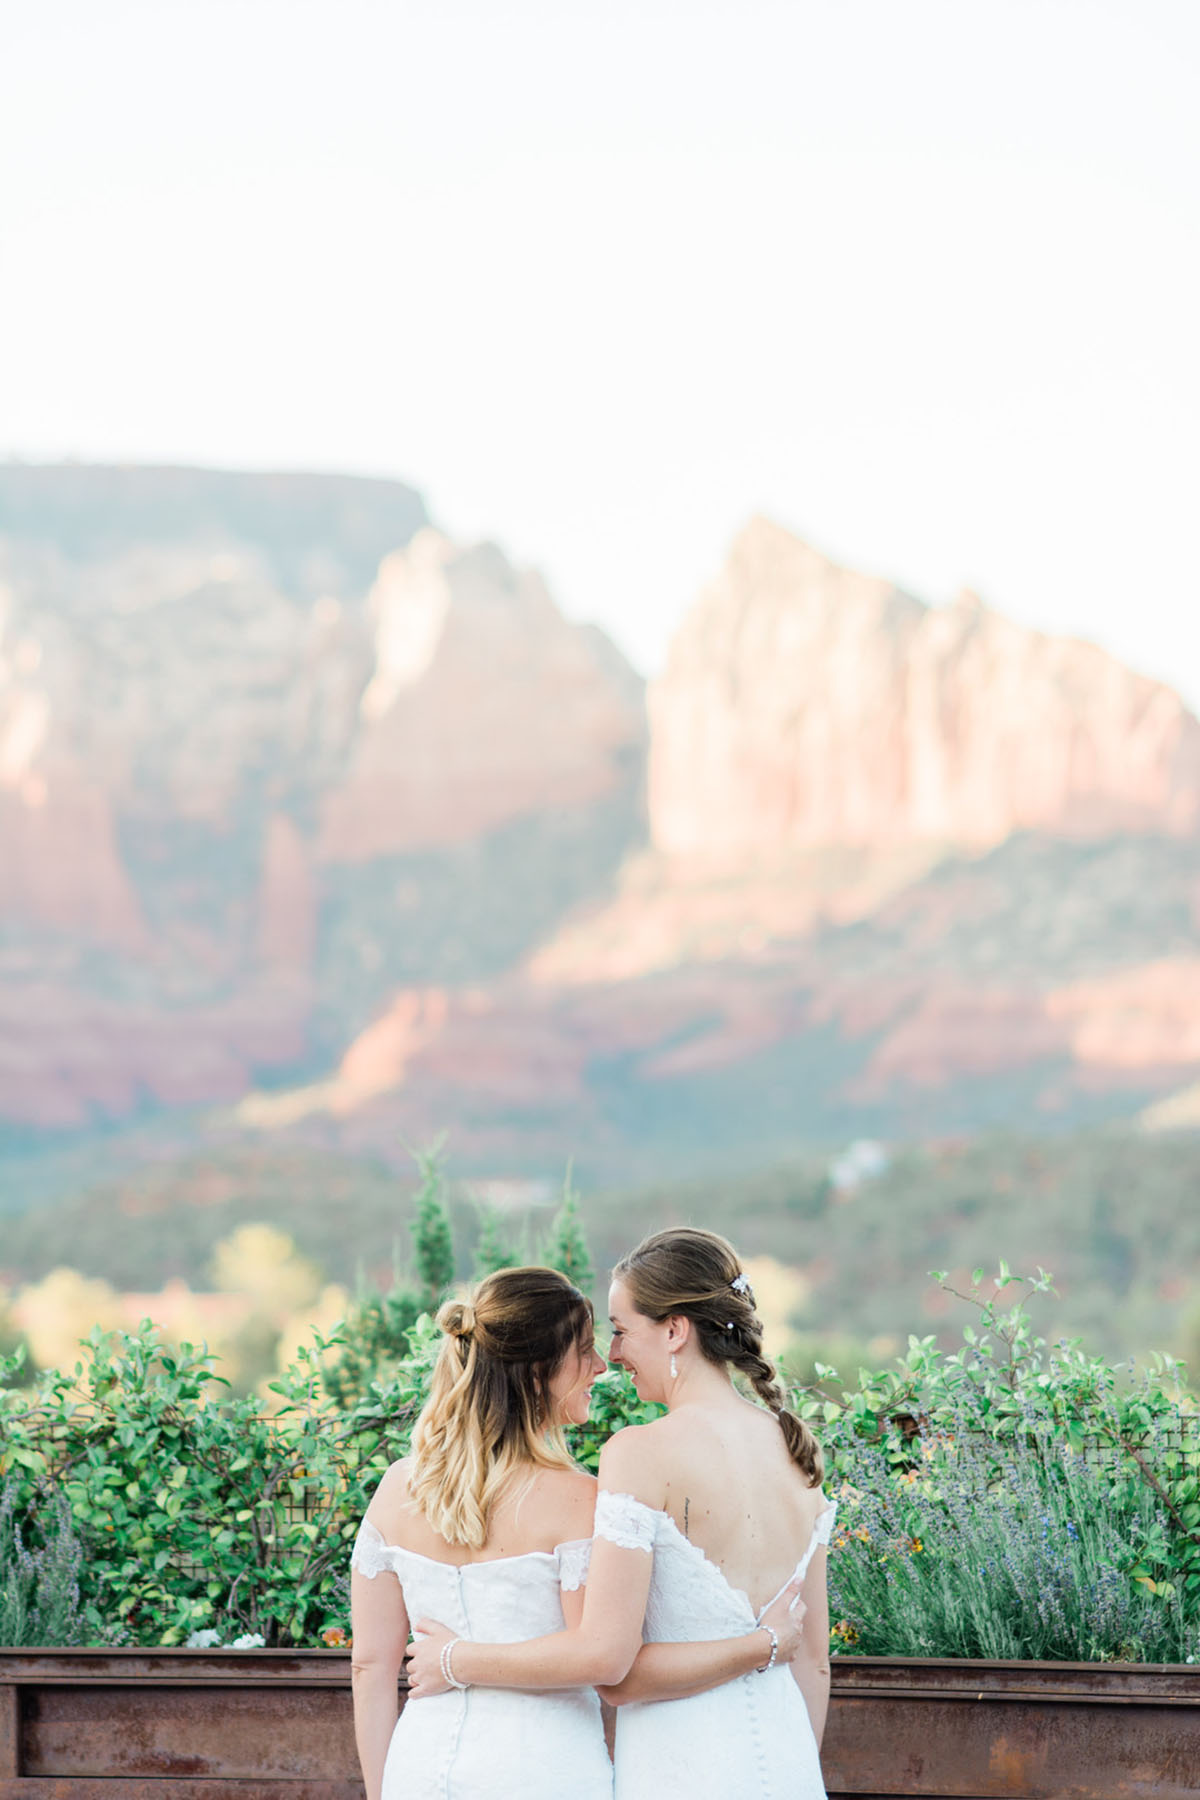 Hilltop wedding in the mountains of Sedona, Arizona